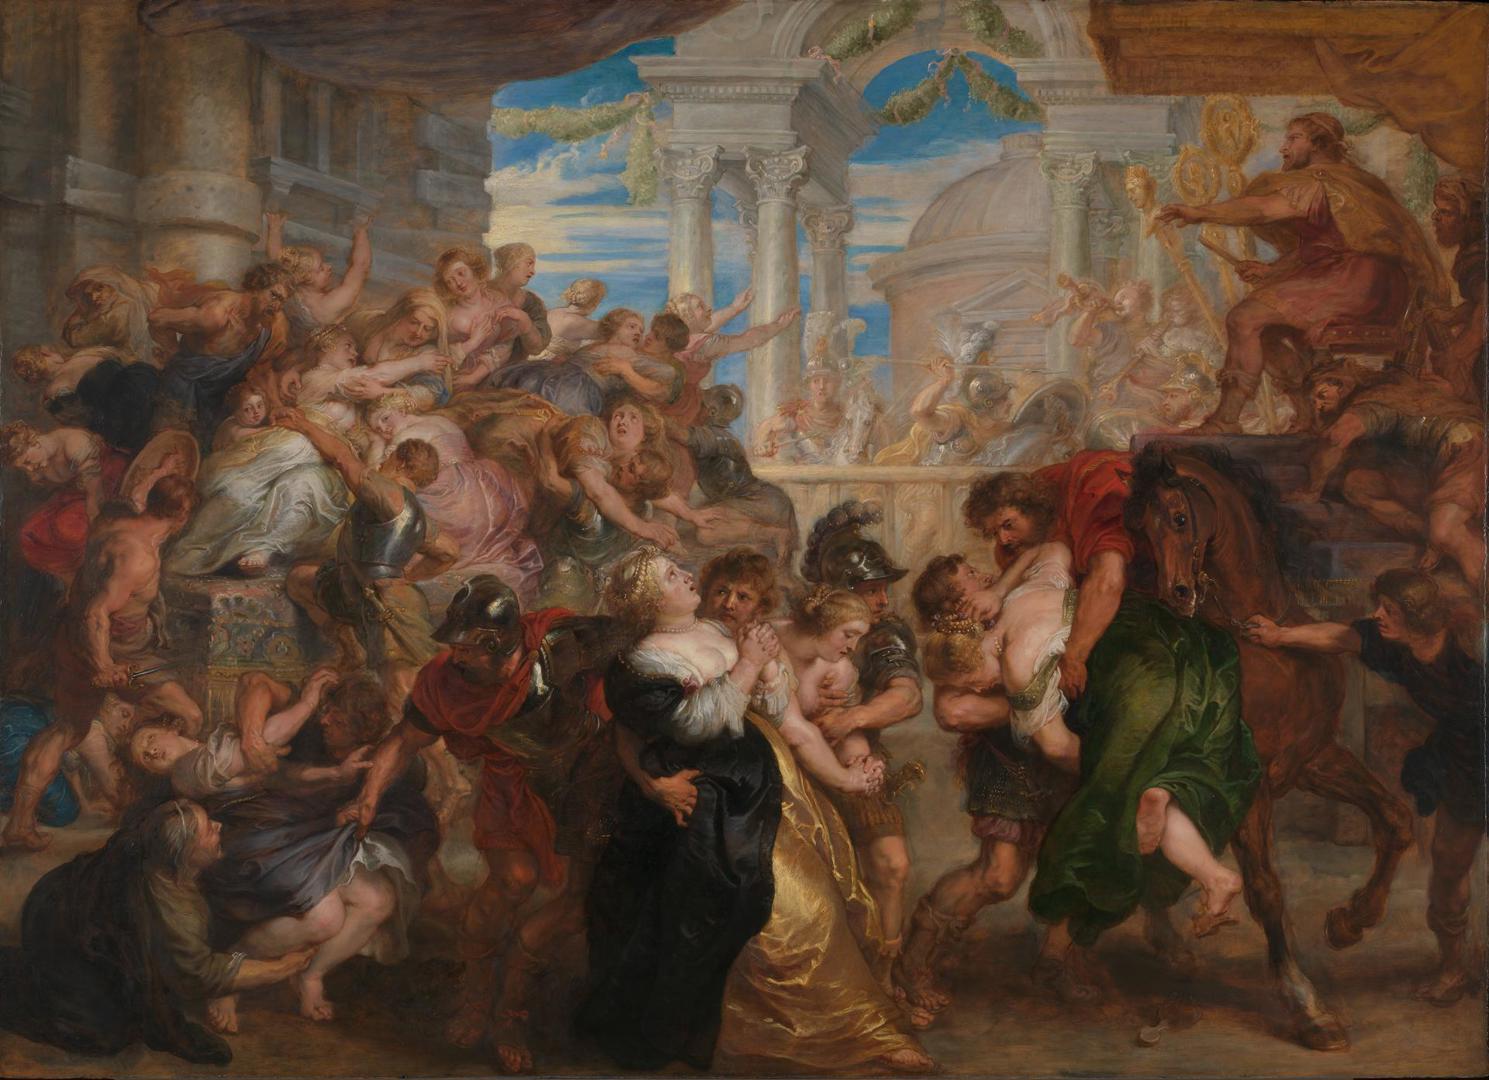 The Rape of the Sabine Women by Peter Paul Rubens